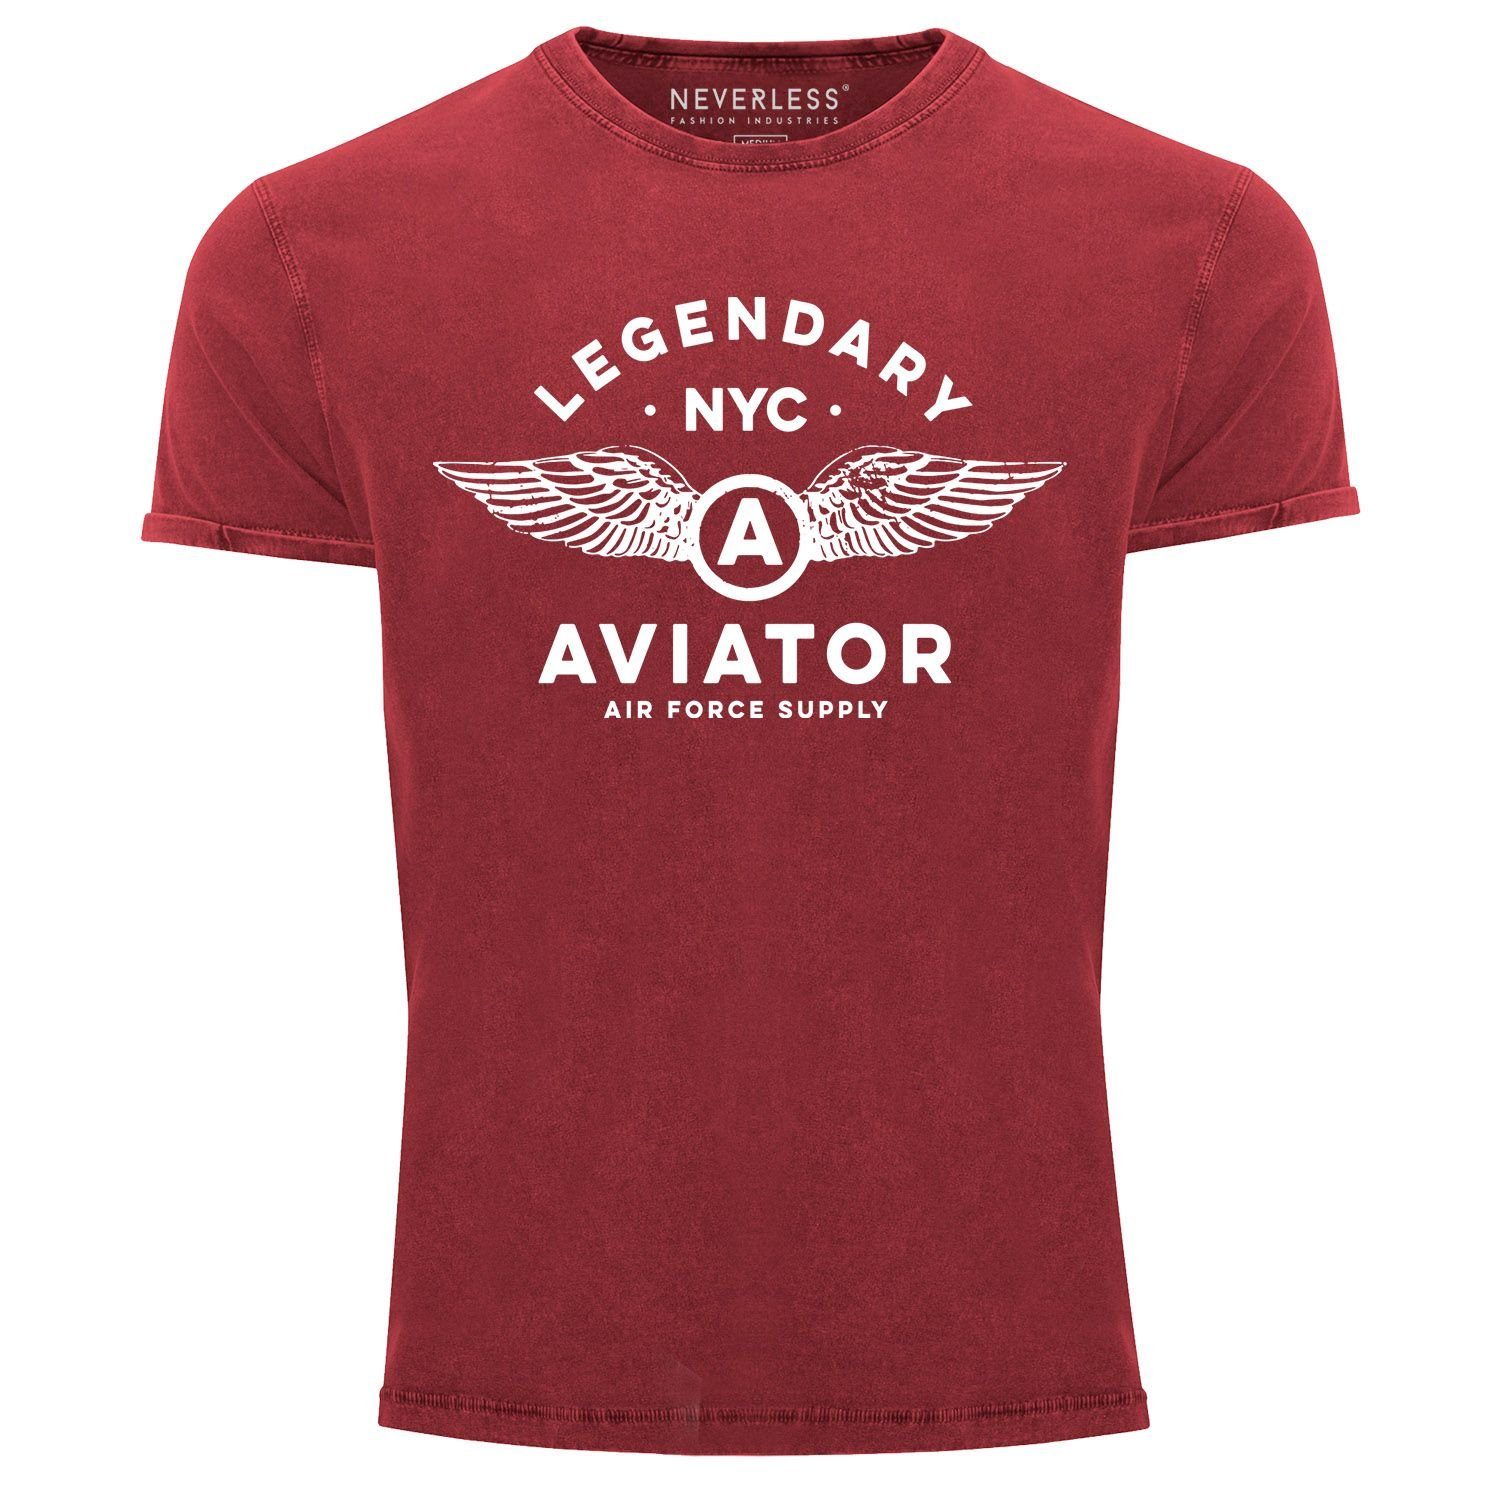 Neverless Print-Shirt Herren Vintage Shirt Legendary NYC Aviator Air Force Luftwaffe Flügel Printshirt Used Look Slim Fit Neverless® mit Print rot